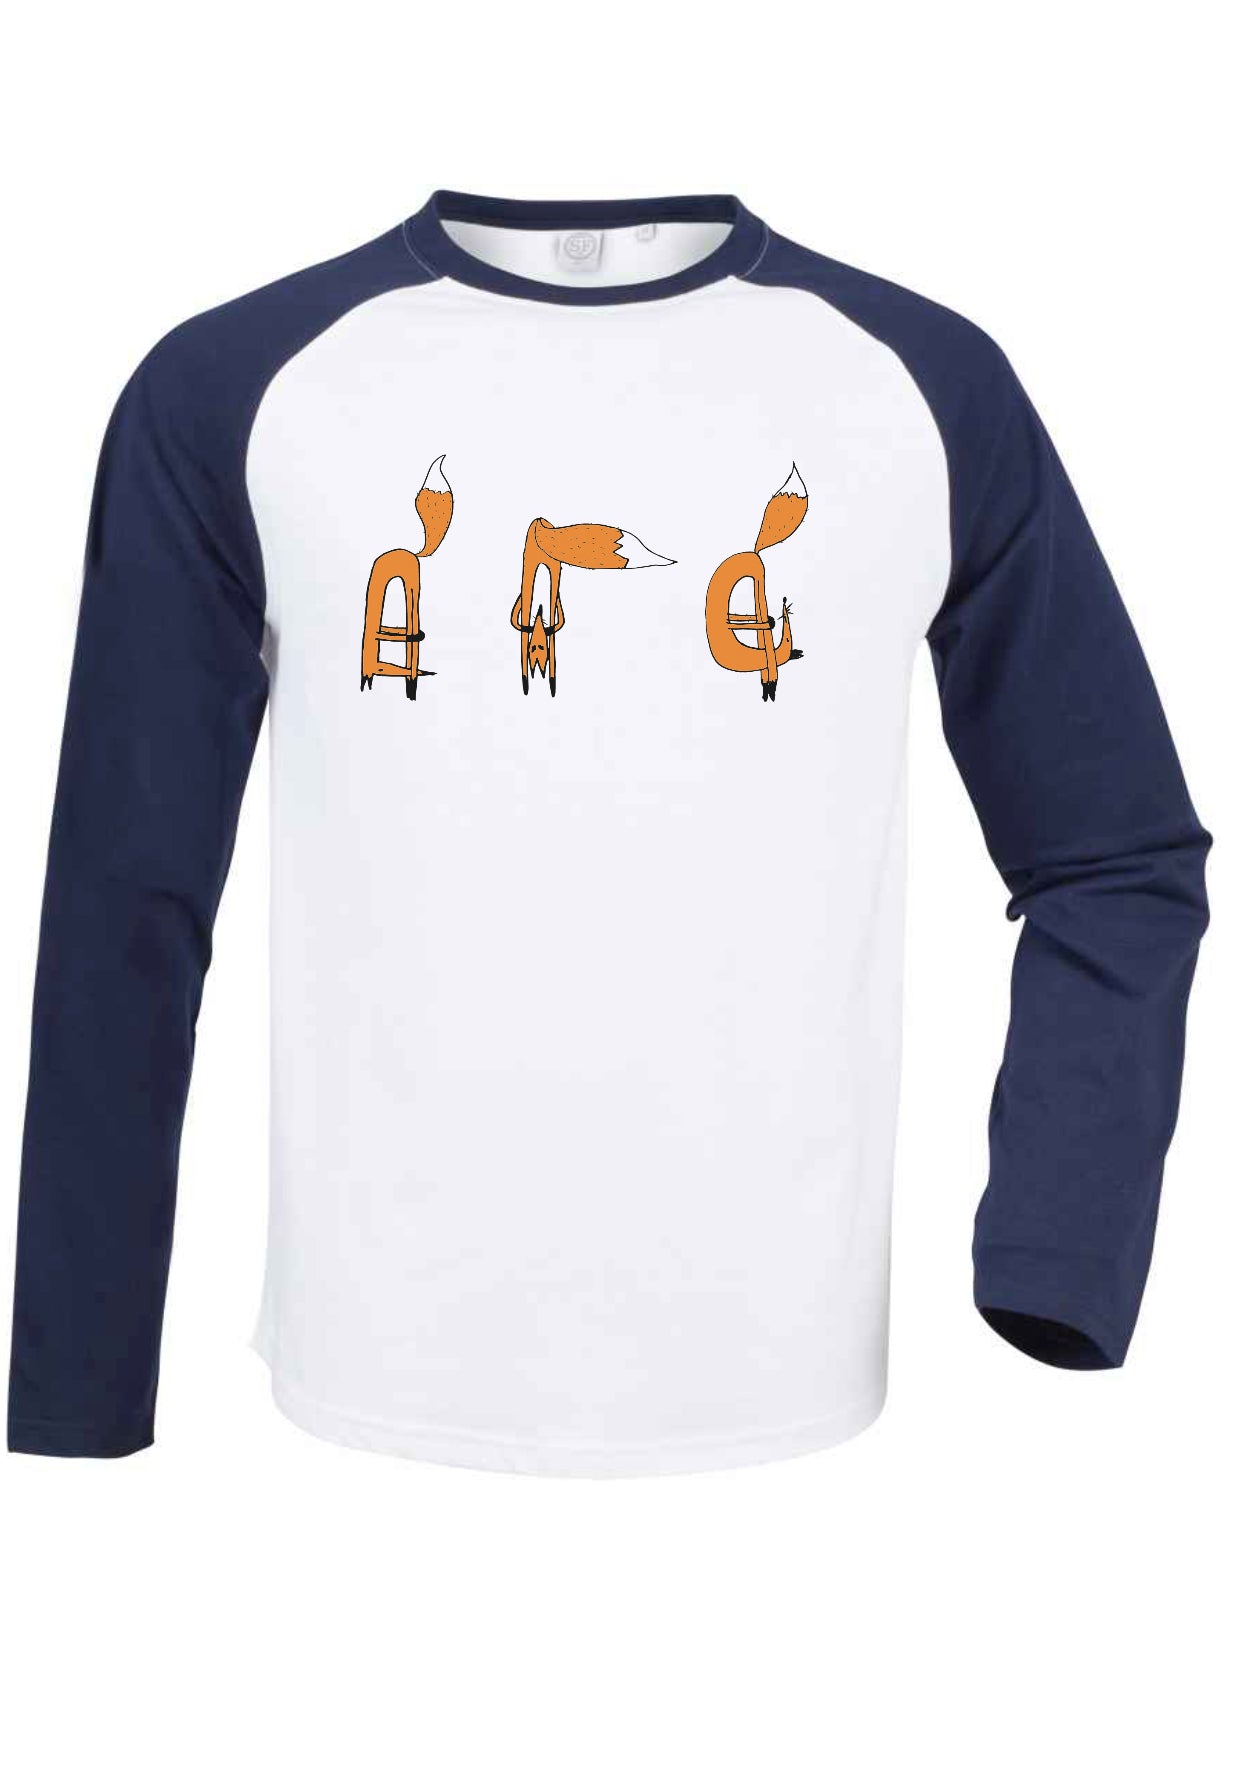 Yoga foxes men raglan shirt